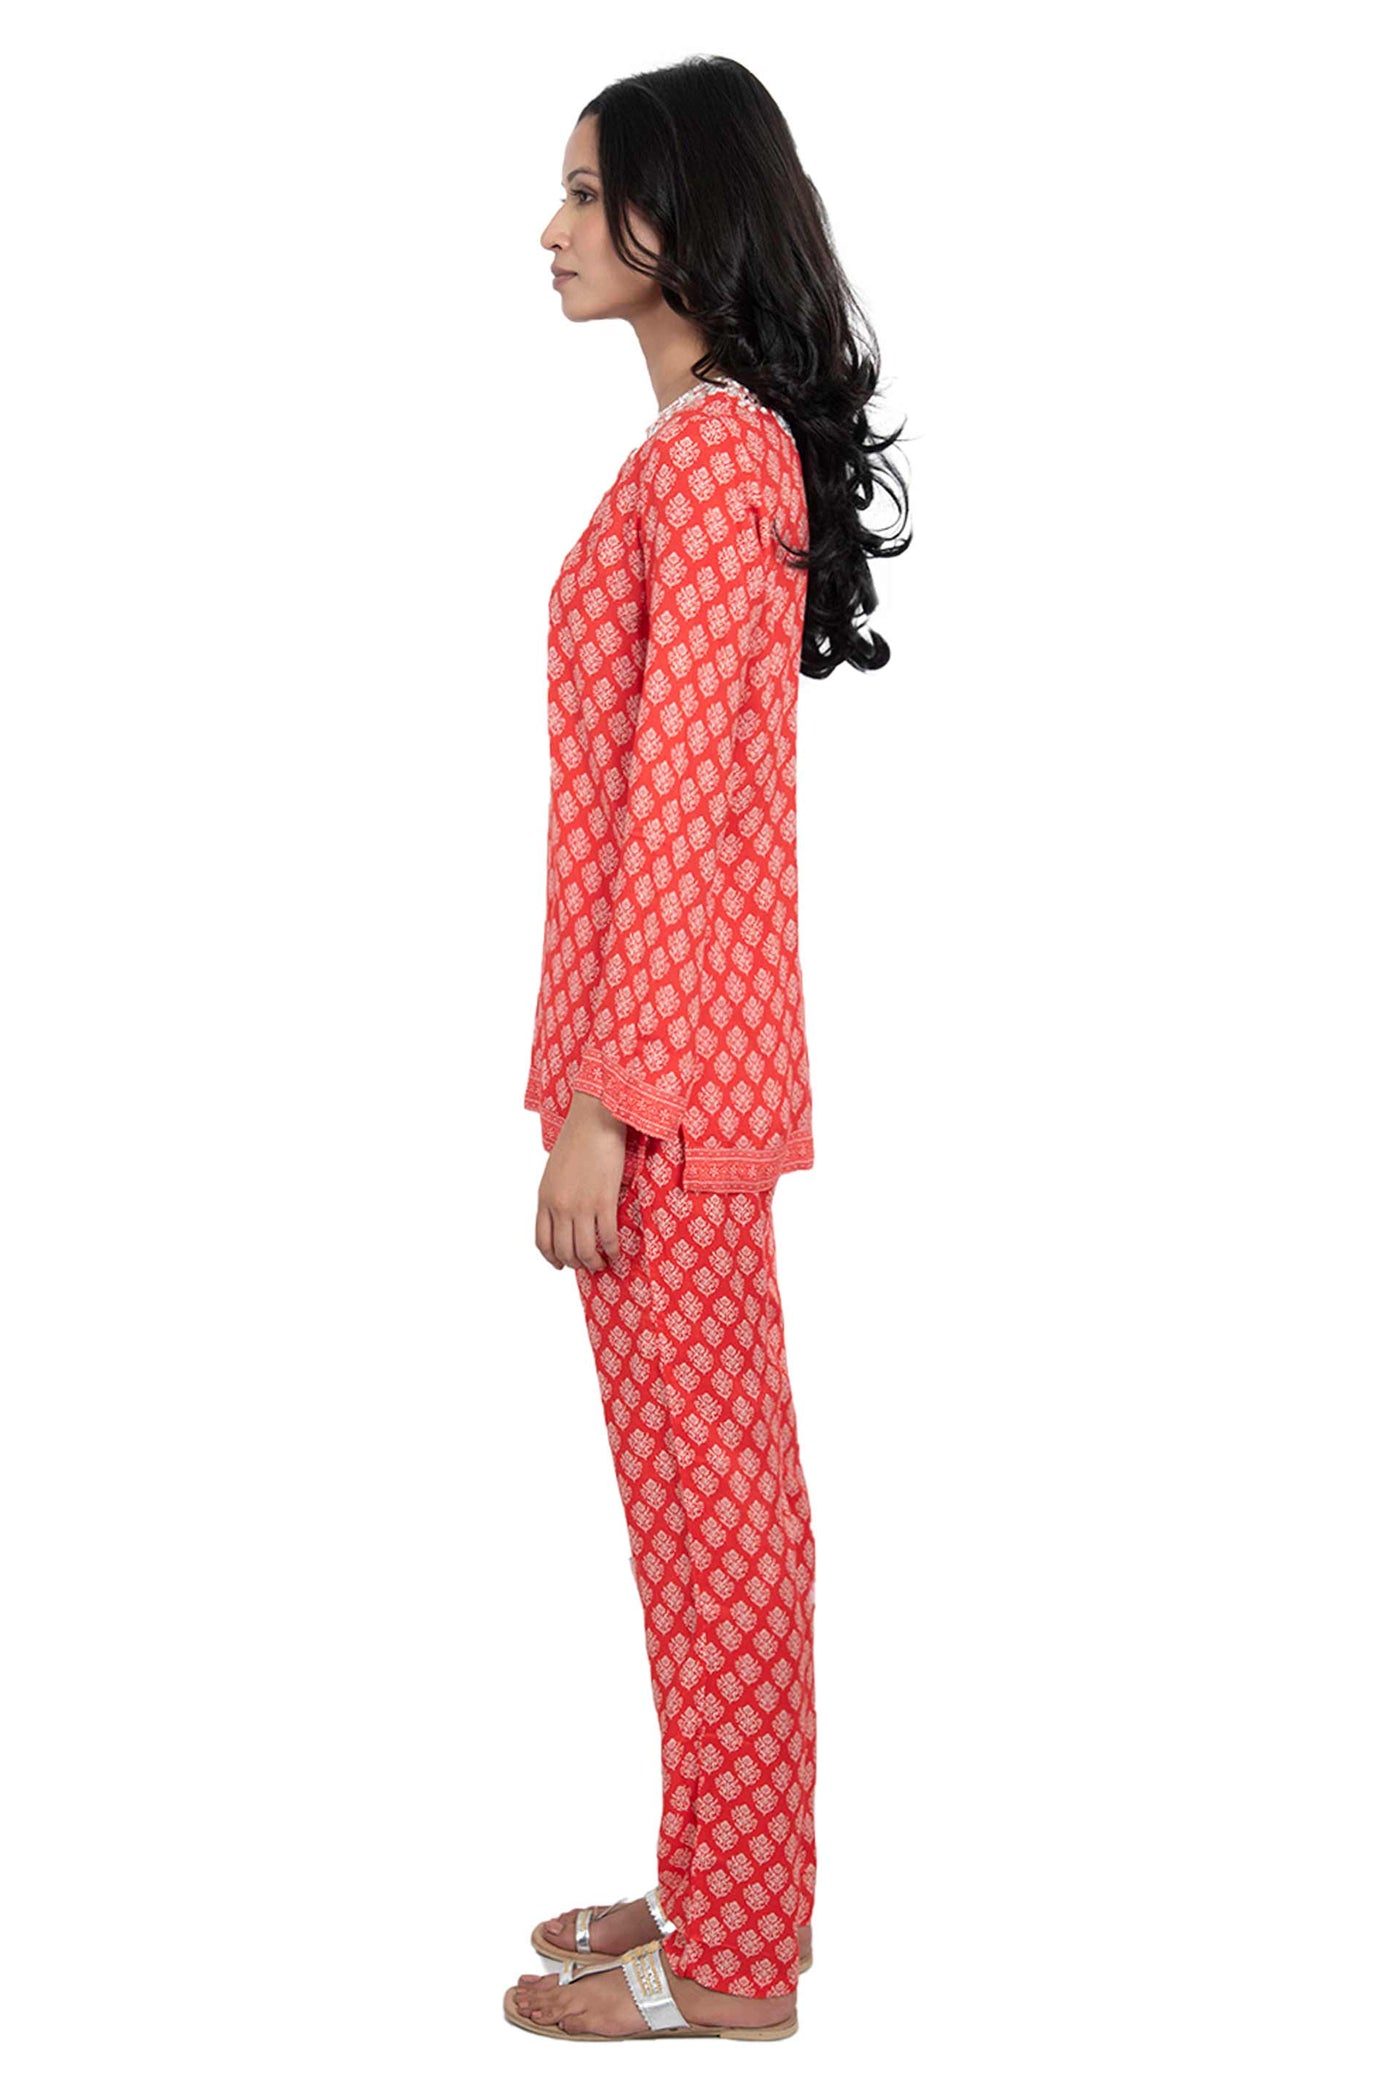 Monisha jaising Scarlet Set red online shopping melange singapore indian designer wear